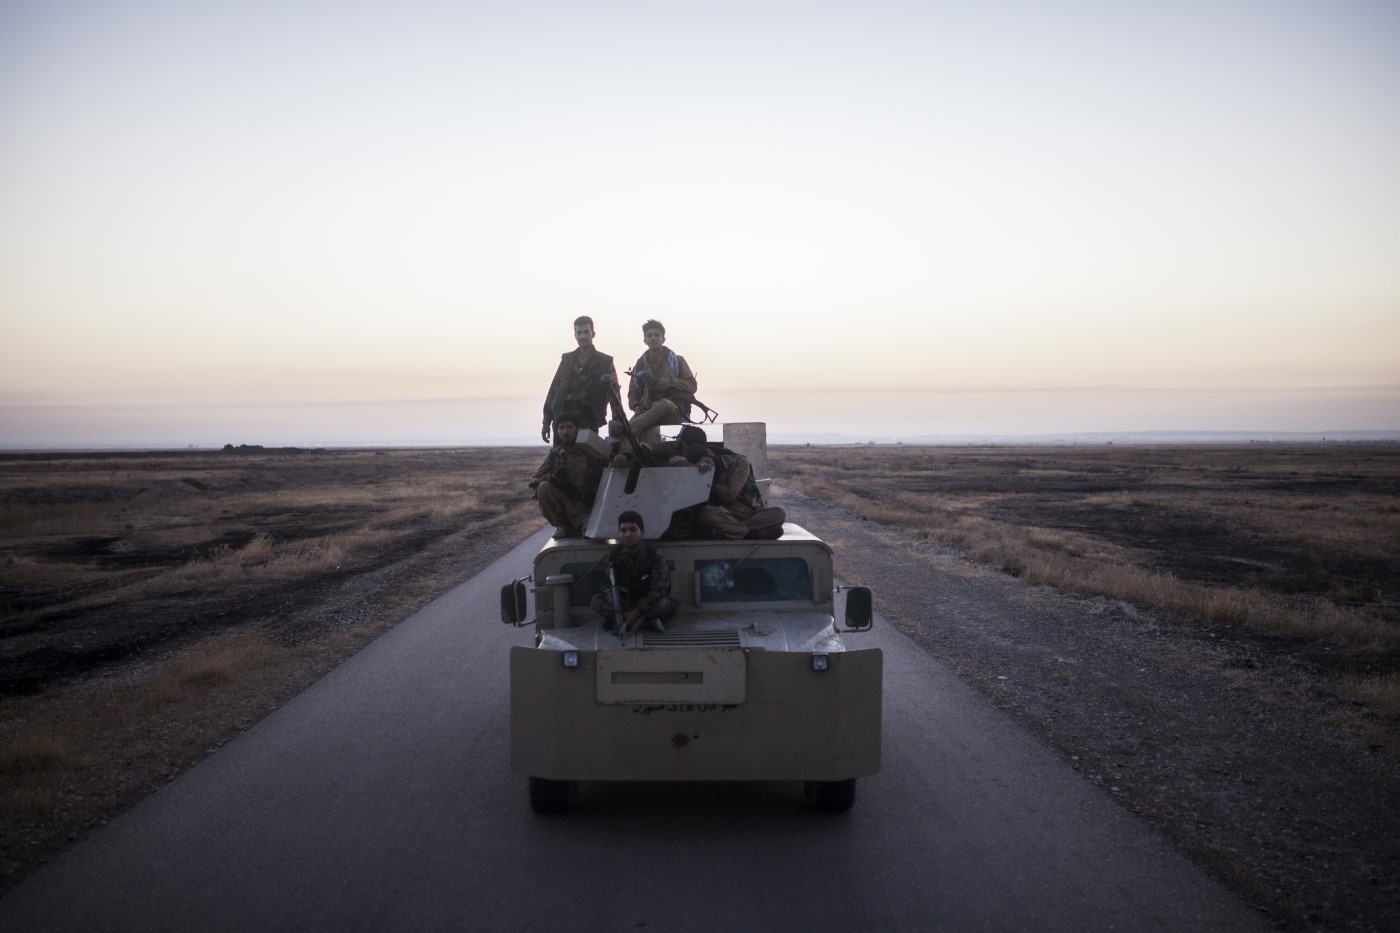 Peshmergas militiamen lying exhausted on a tank minutes after the Islamic State attack. Tuzkhurmatu, Kurdistan, Iraq. June 20, 2017